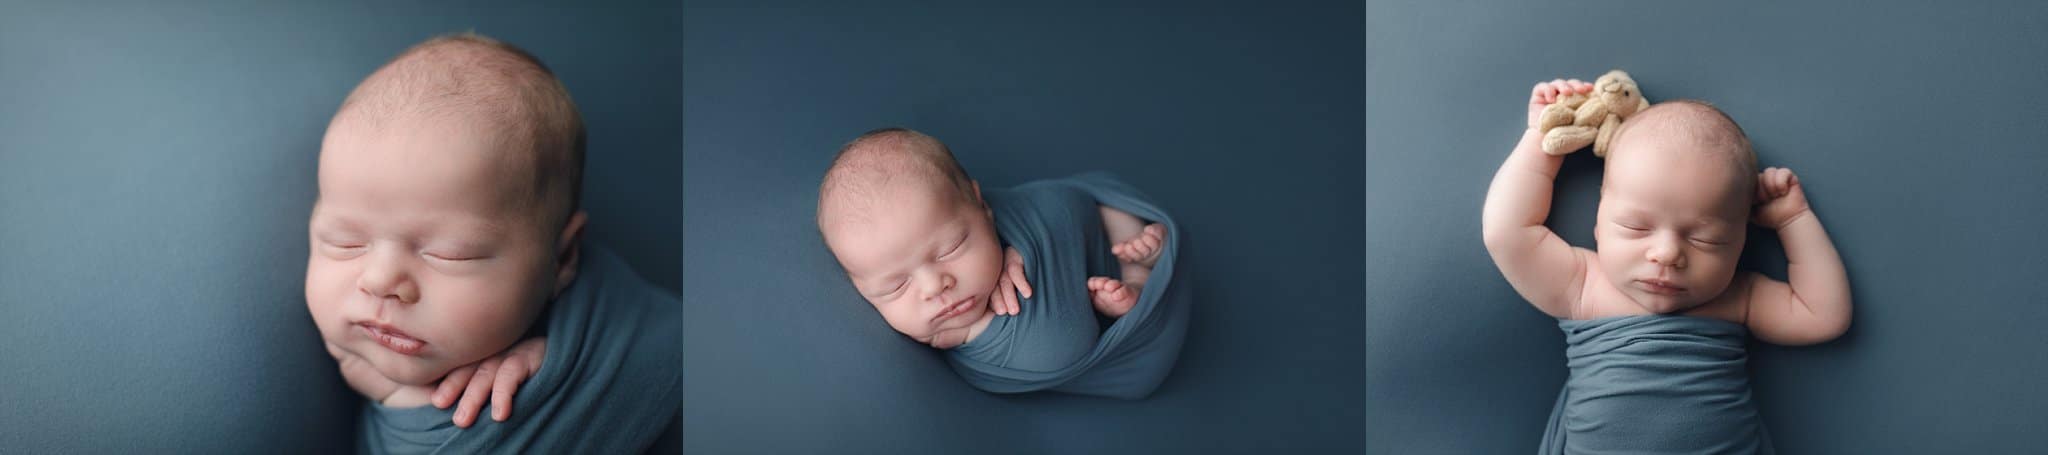 newborn baby boy sleeping teal background